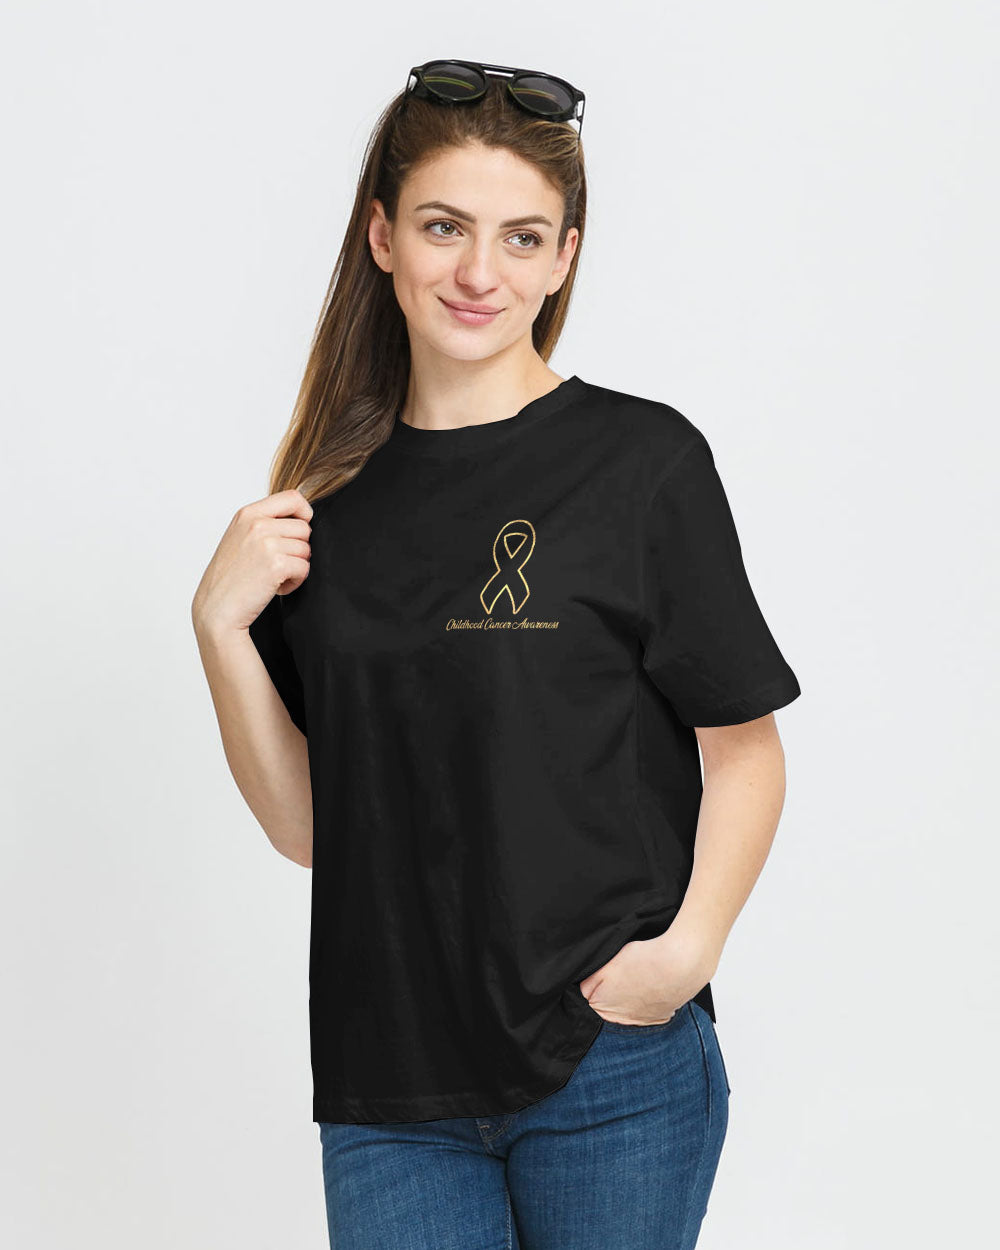 Wings Ribbon Glitter Women's Childhood Cancer Awareness Tshirt